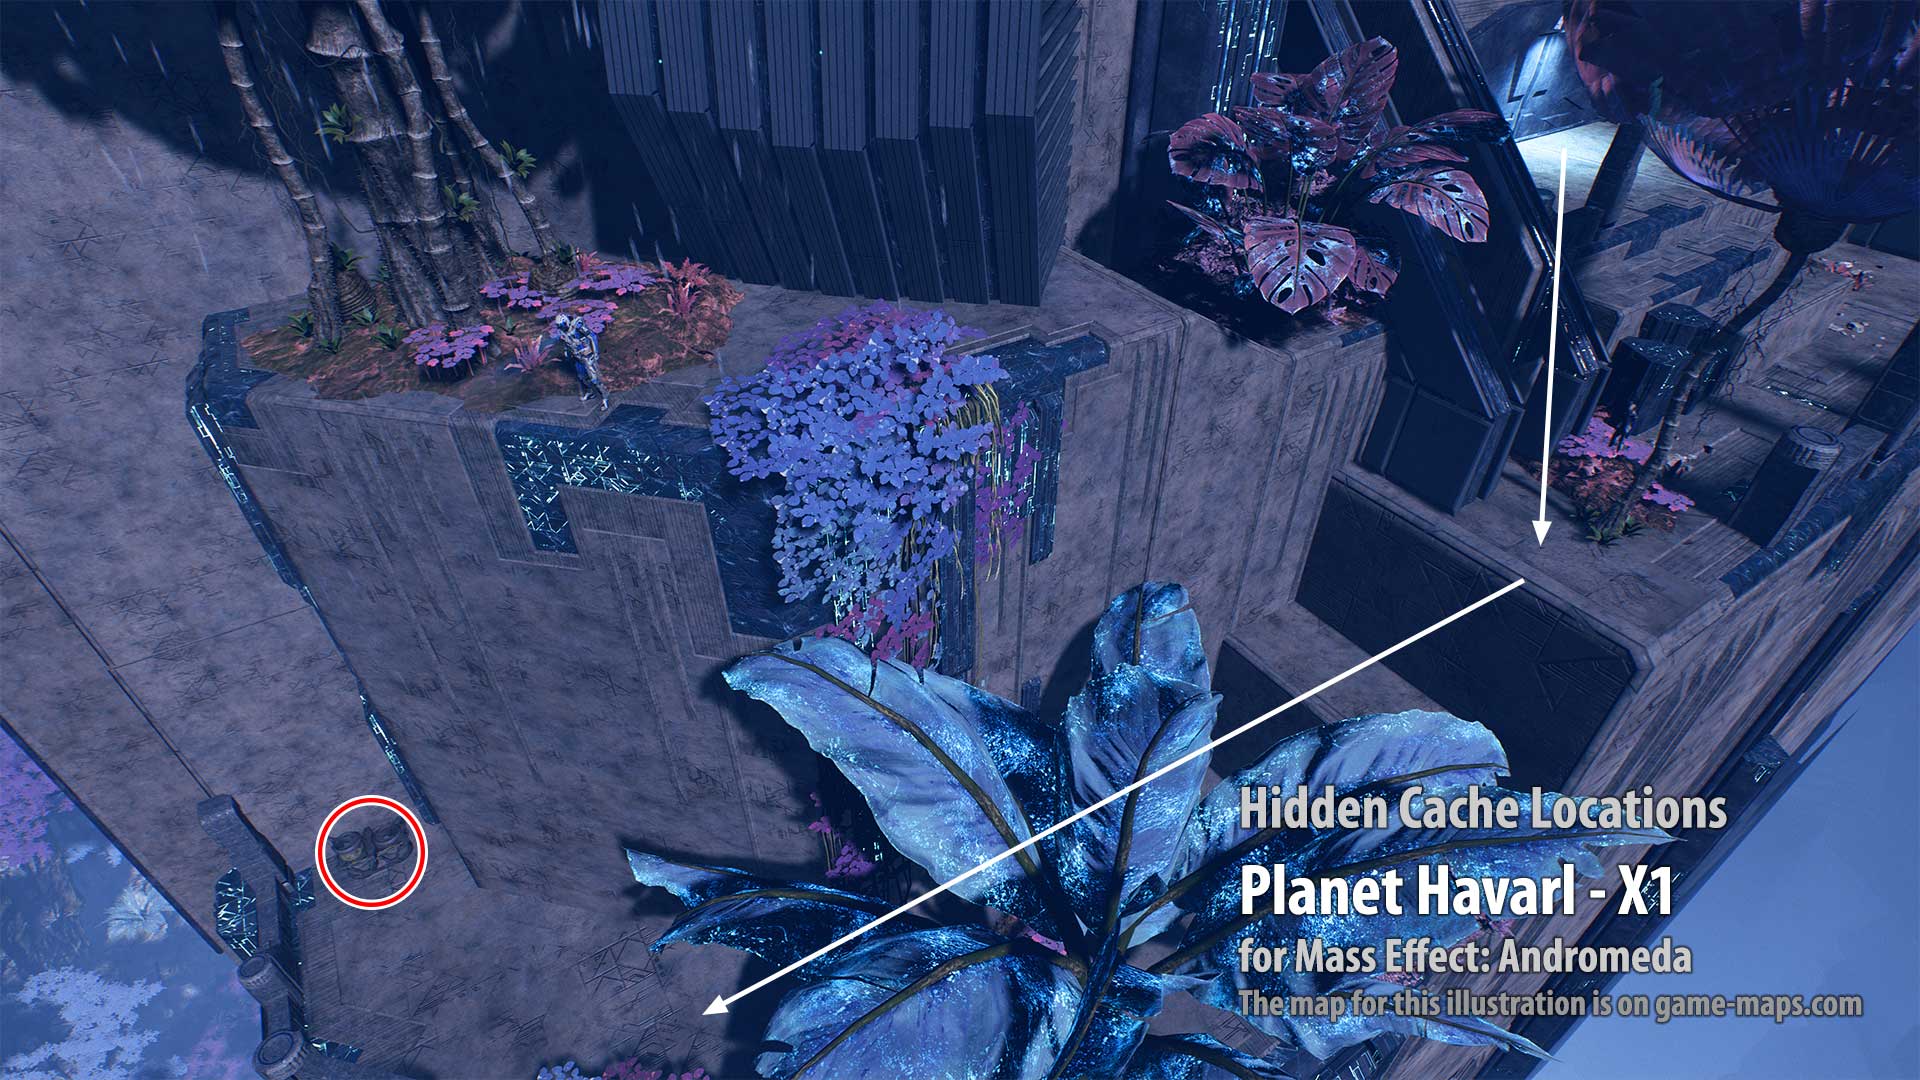 Hidden Cache - Planet Havarl-X1 - Mass Effect Andromeda.